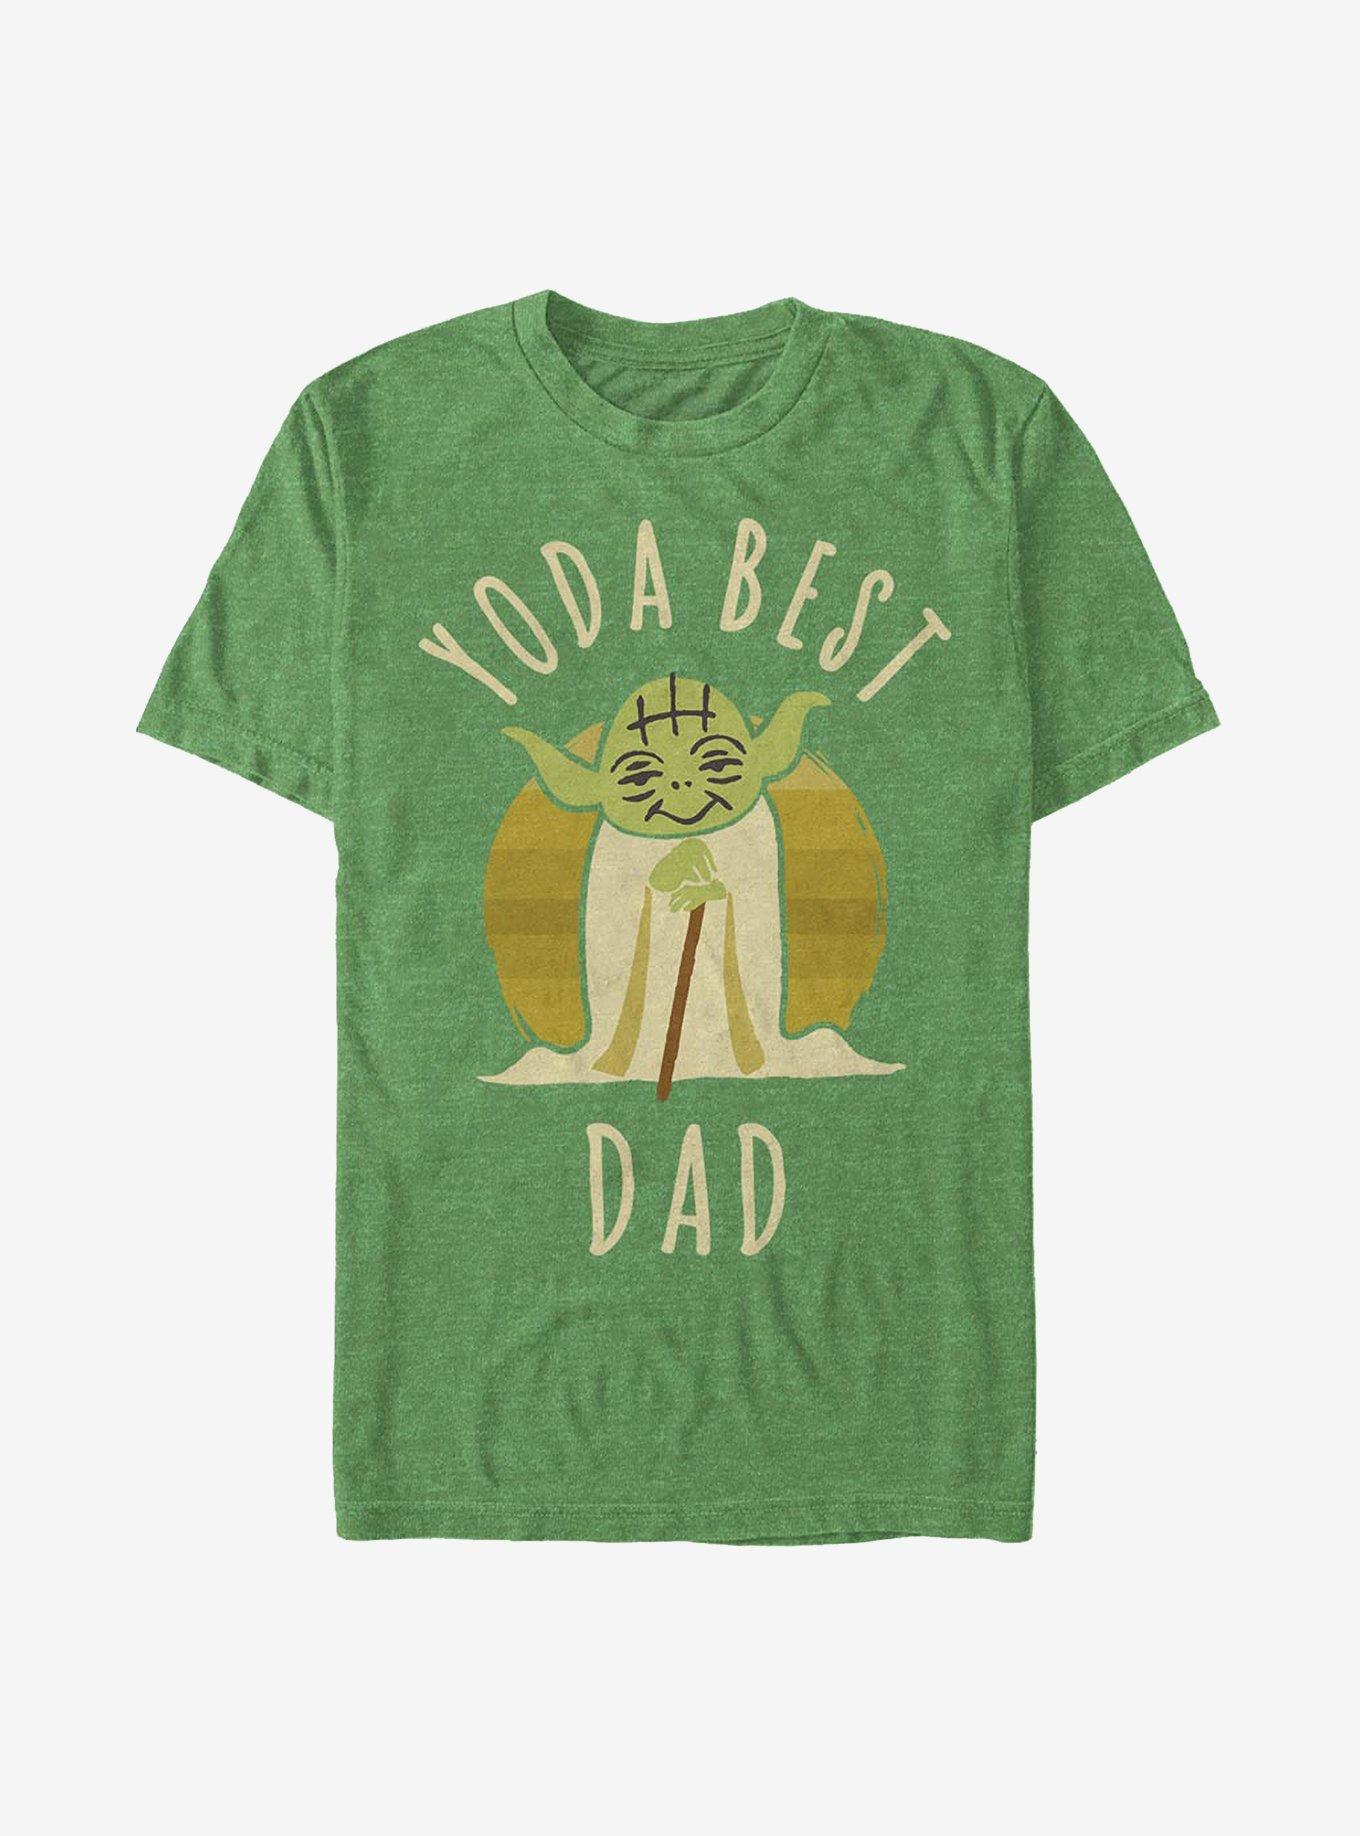 Star Wars Best Dad Yoda Says T-Shirt